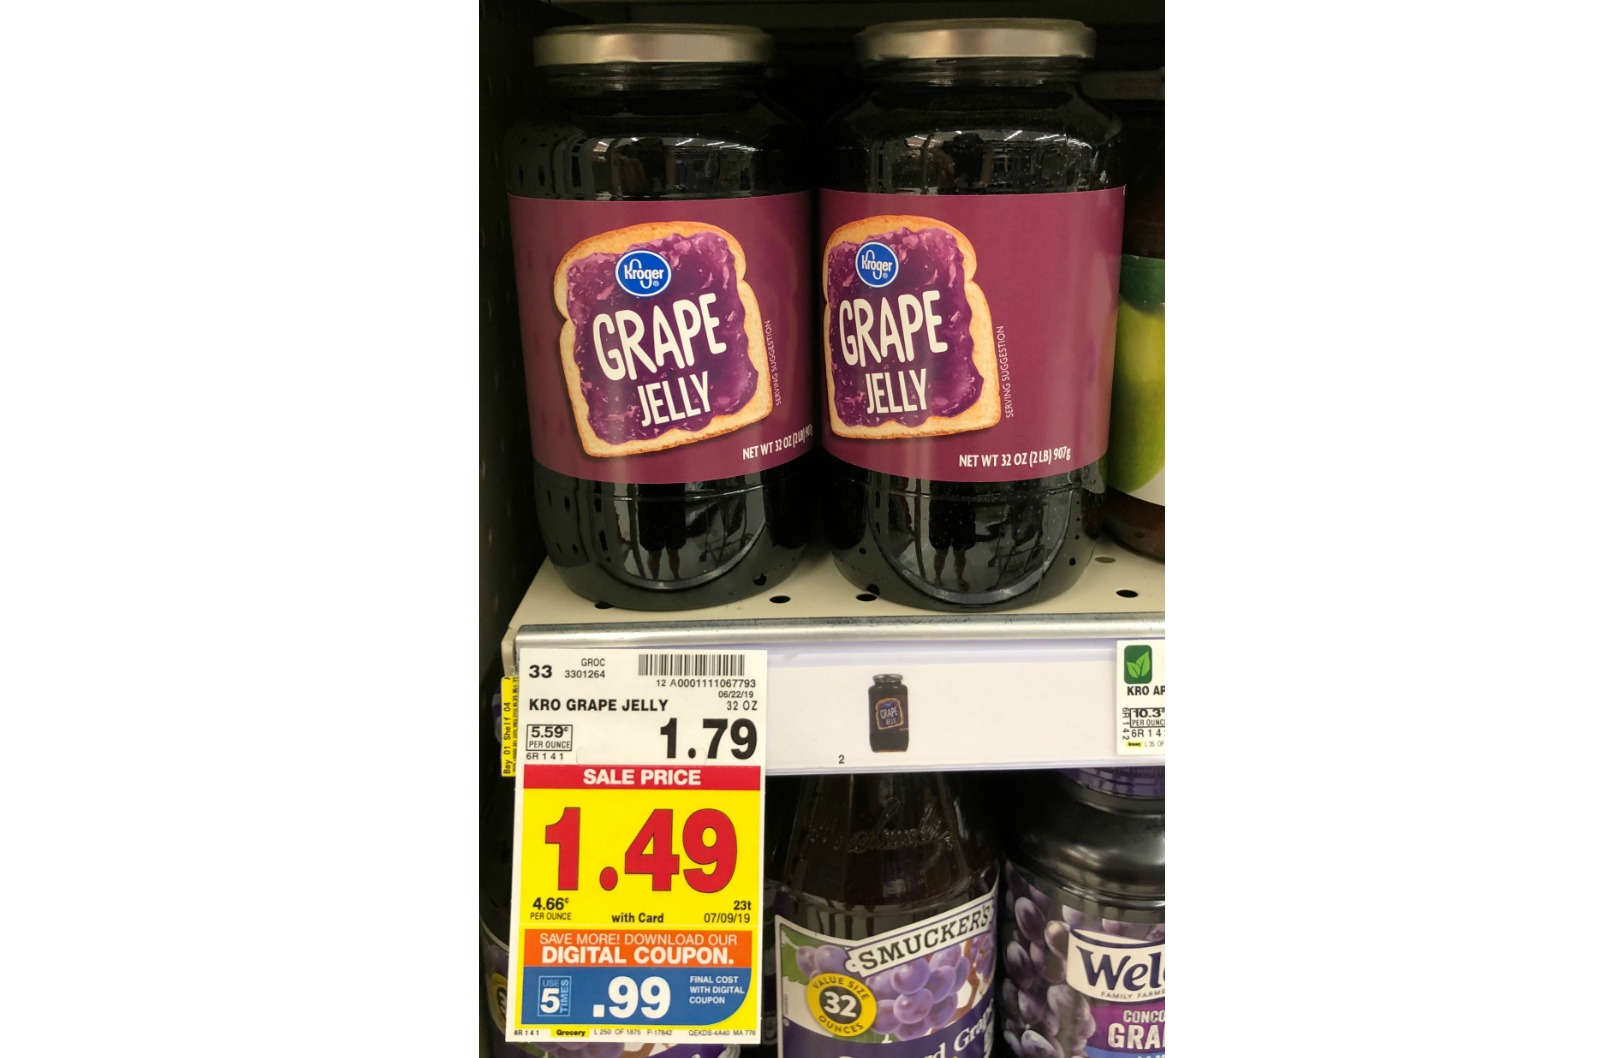 kroger grape jelly (32 oz) only $0.99 (reg $1.79)